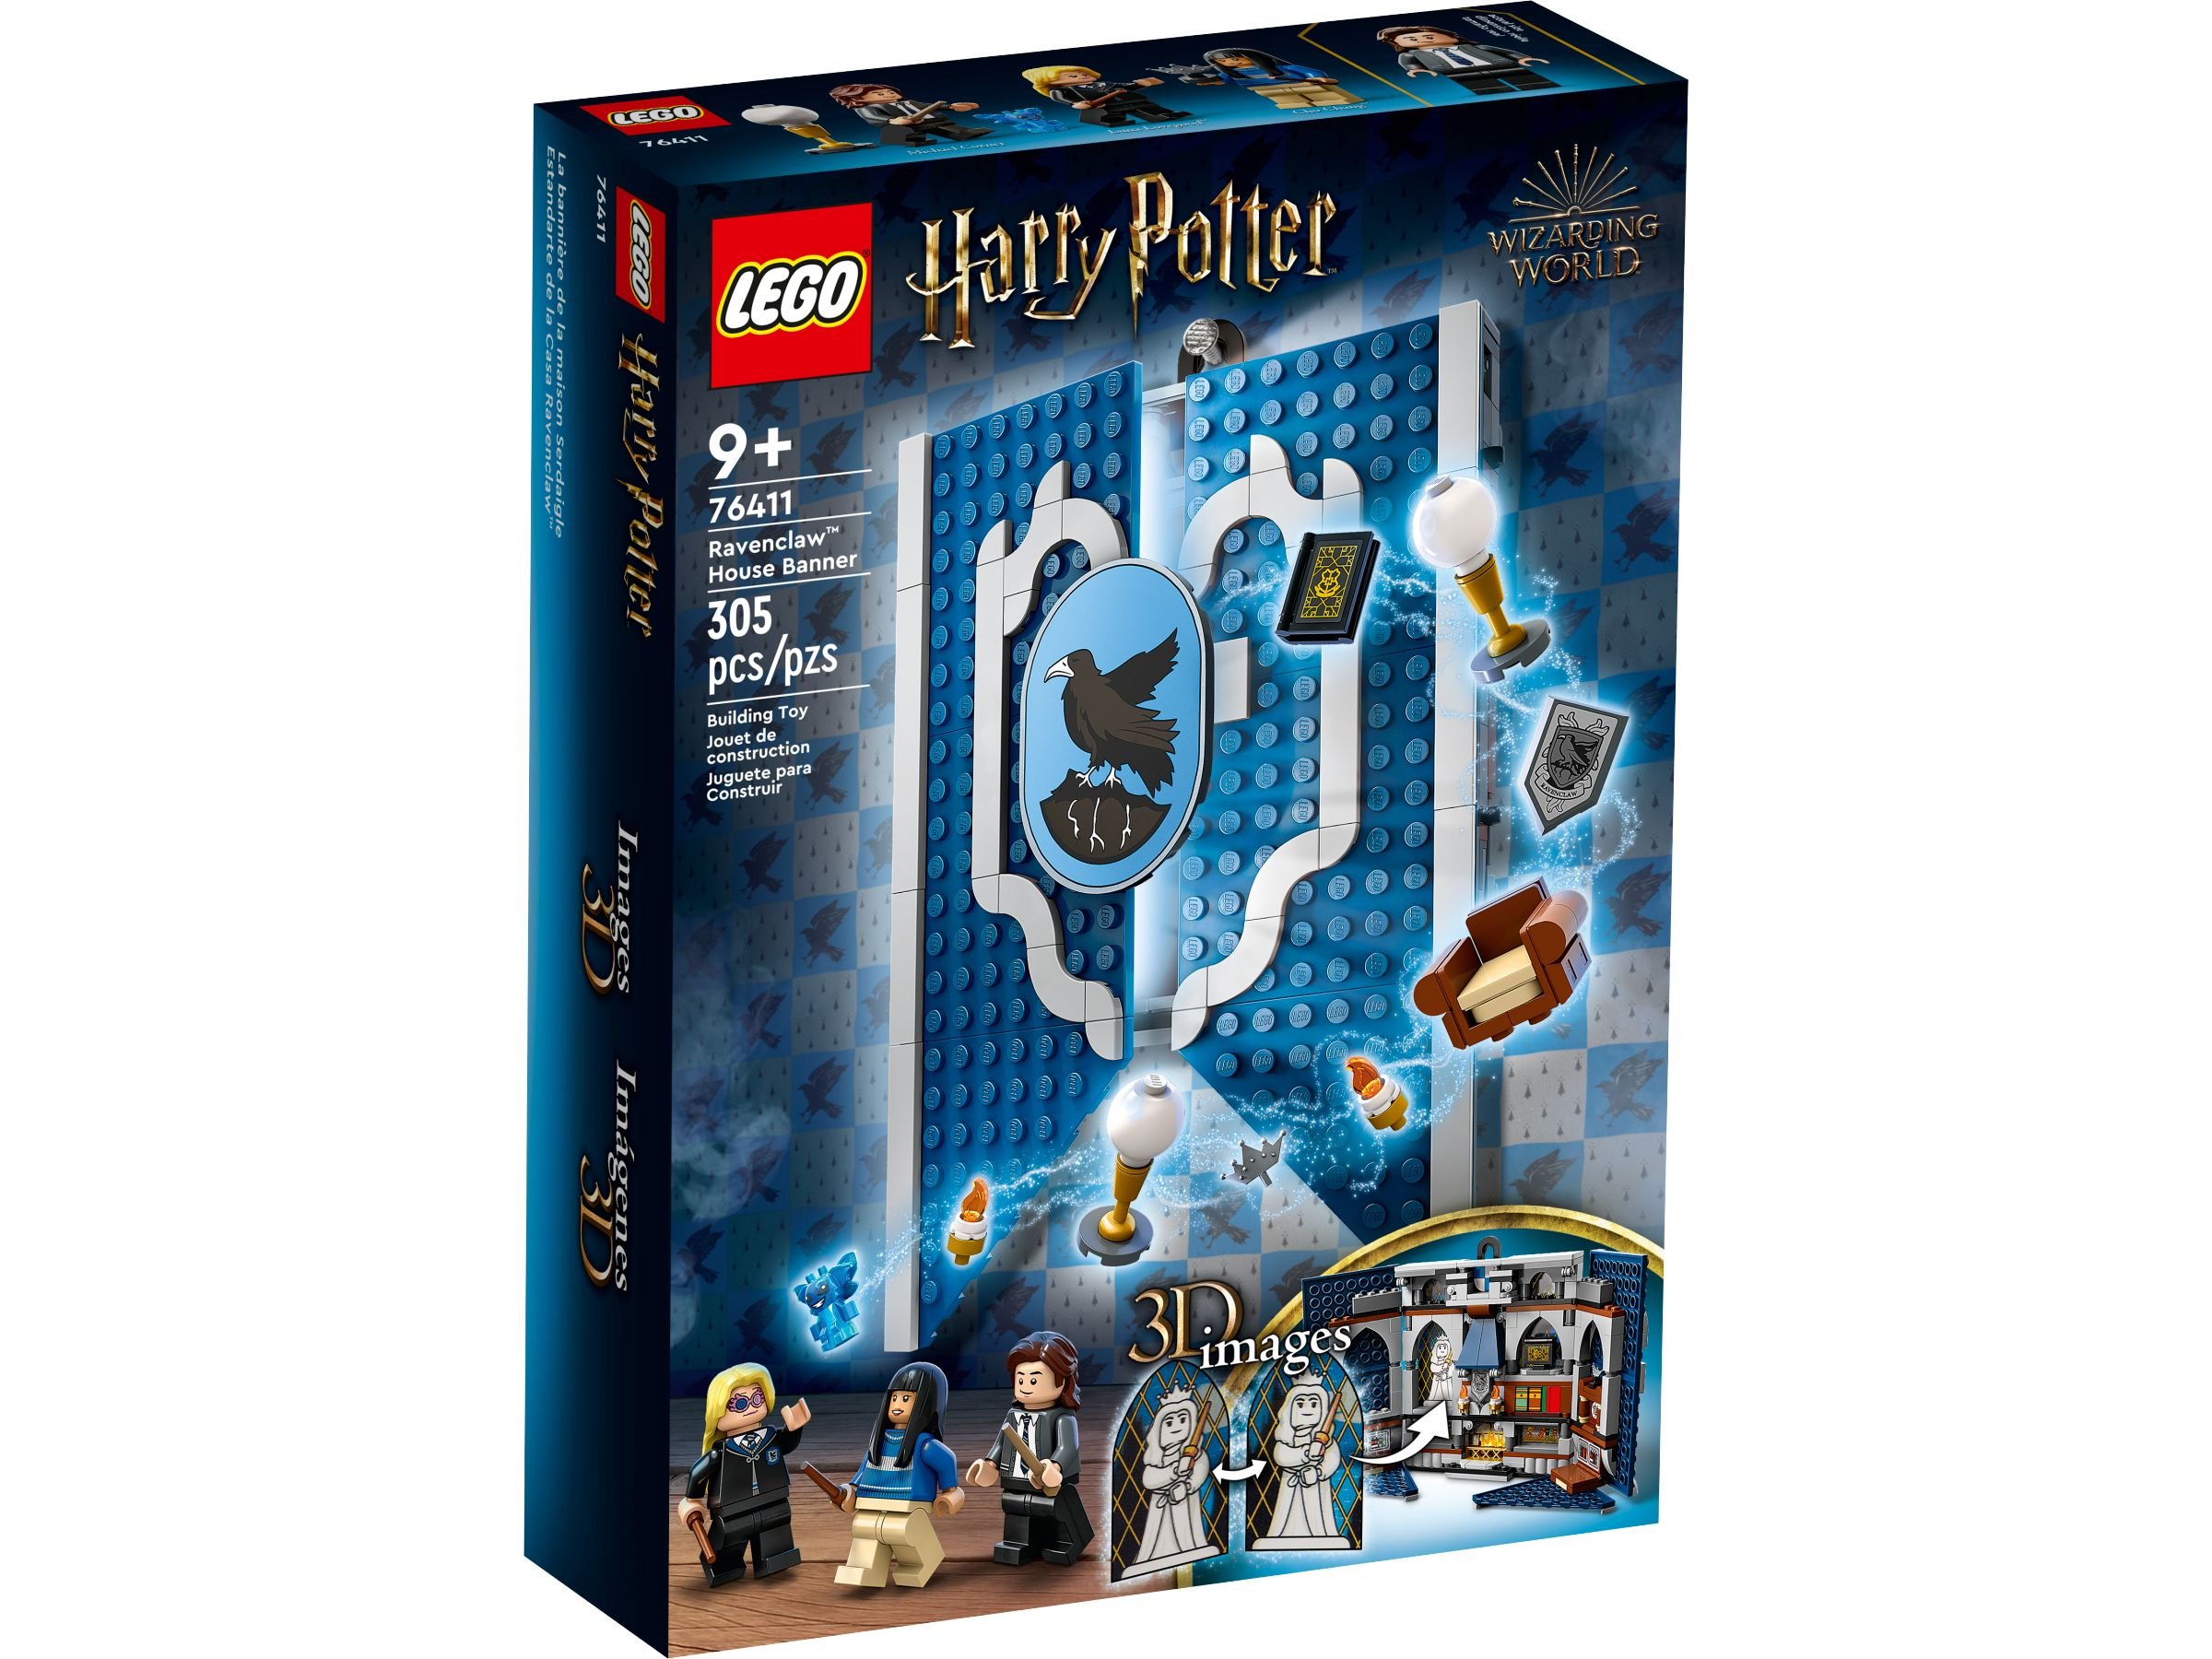 LEGO Harry Potter 76411 Hausbanner Ravenclaw™ LEGO_76411_alt1.jpg